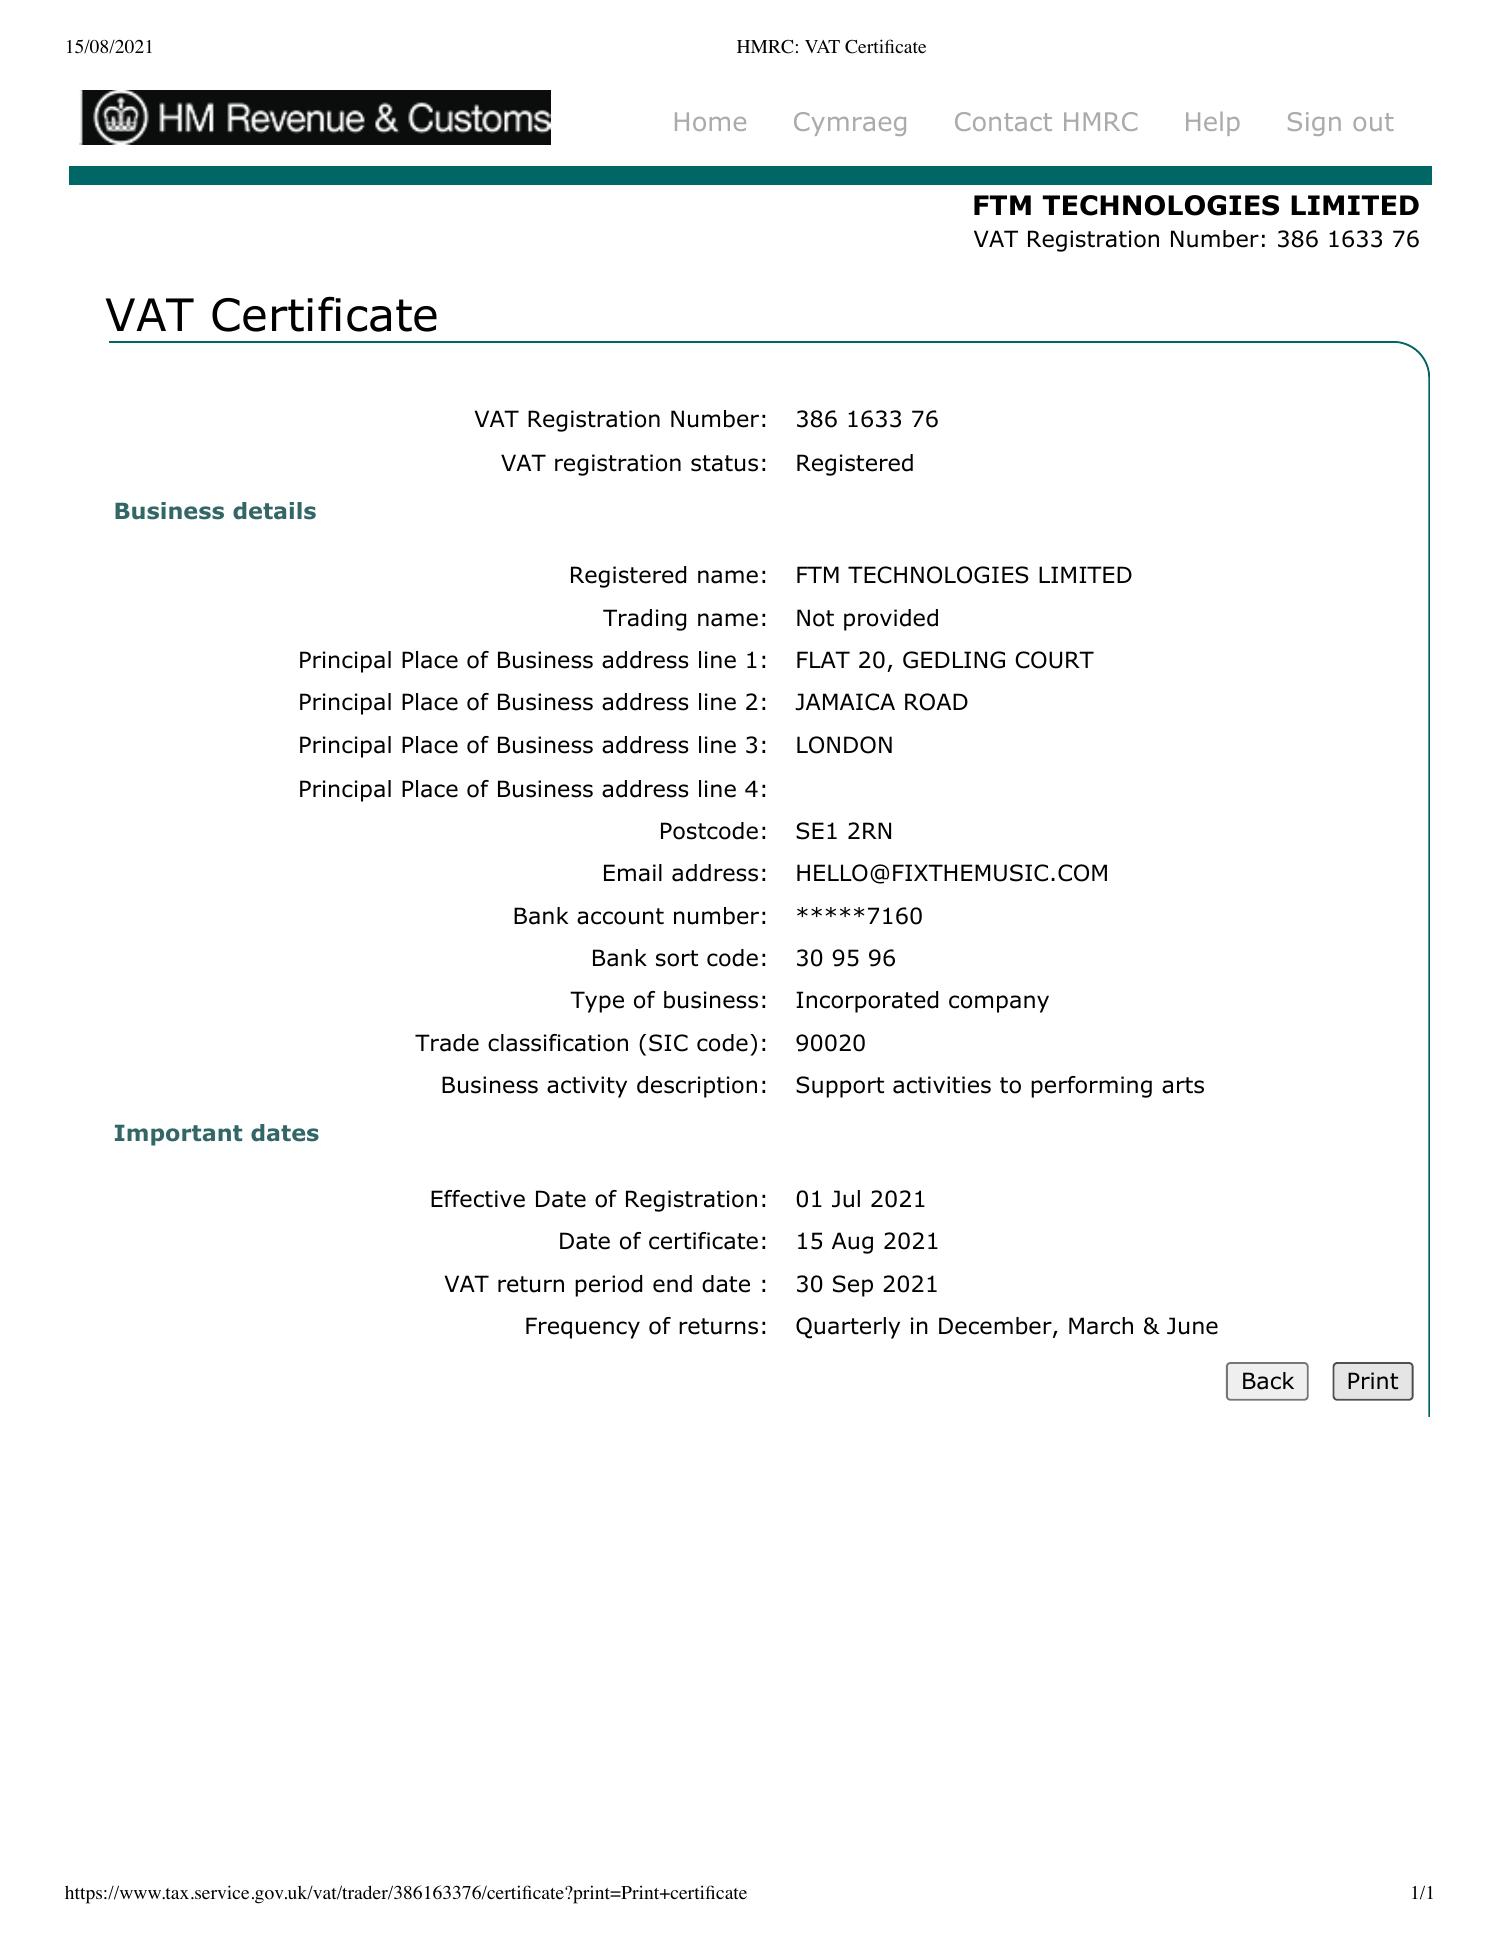 hmrc-vat-certificate-pdf-docdroid